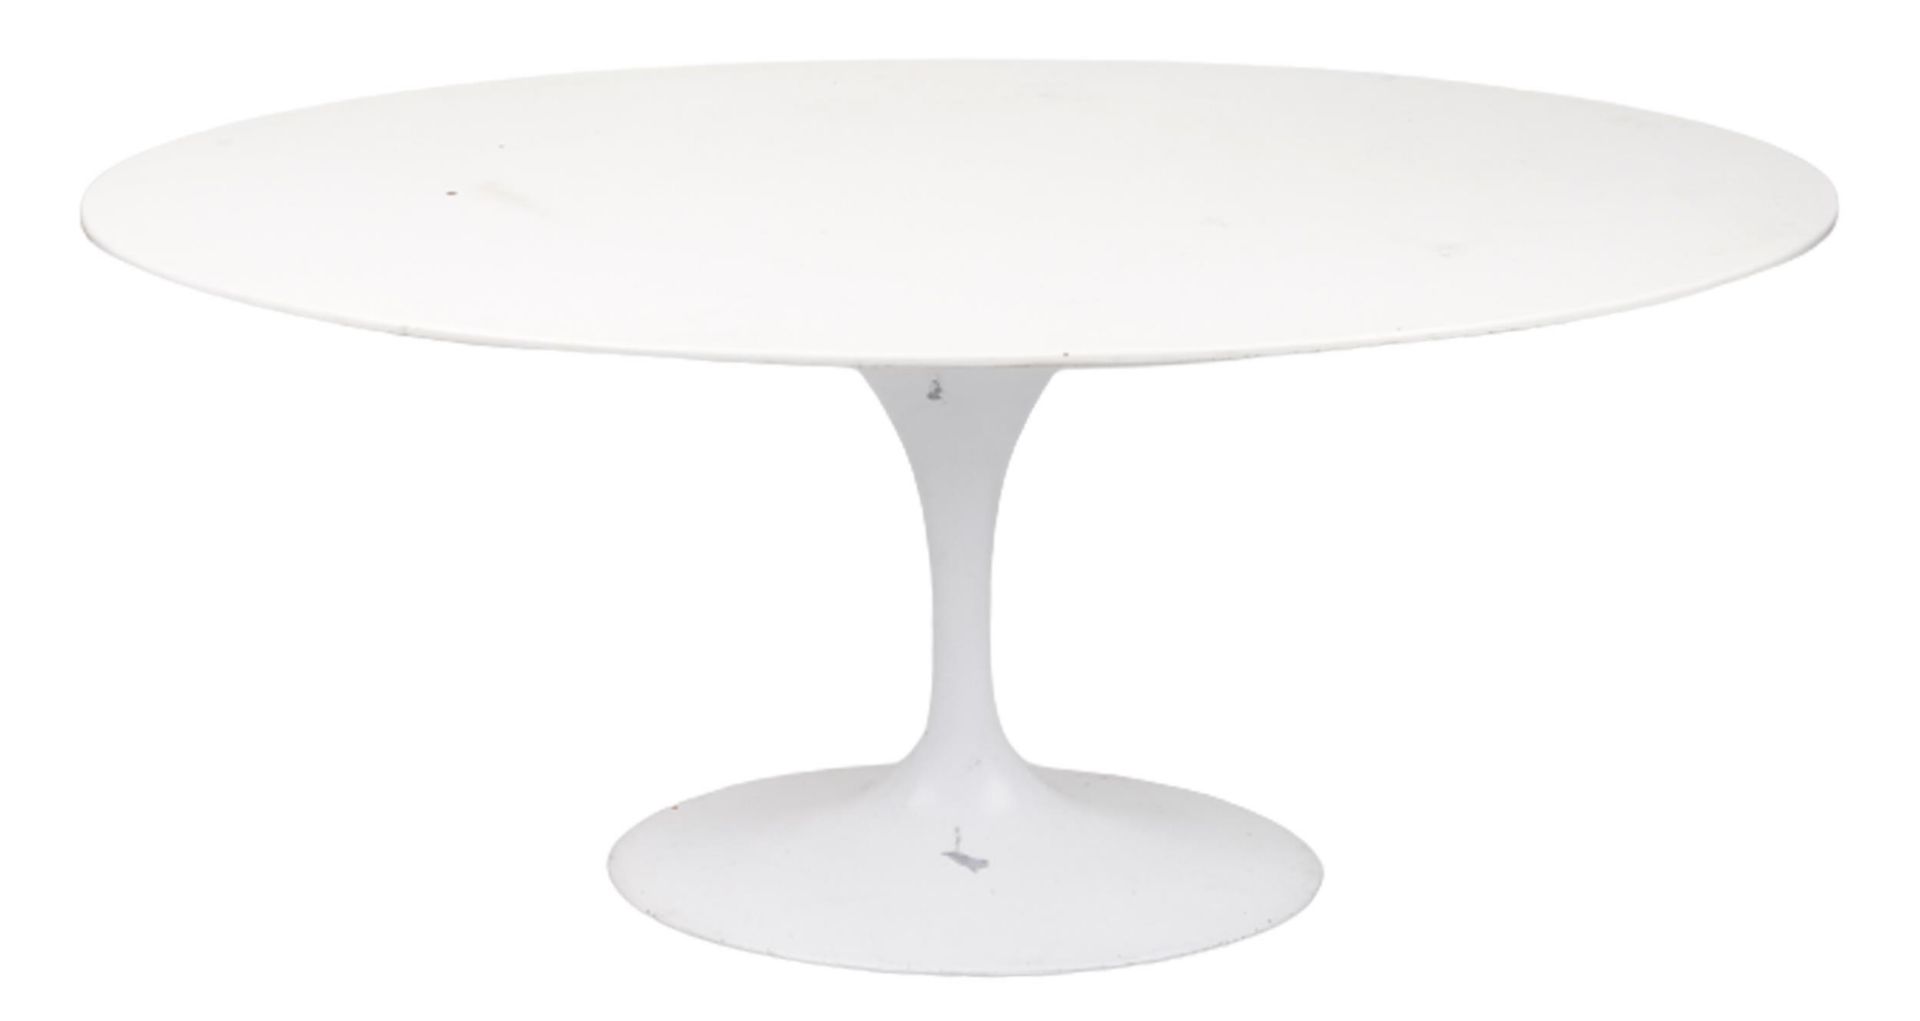 Eero Saarinen design contemporary tulip dining table, 75cm H x 170cm W x 110cm D : For further - Image 3 of 3